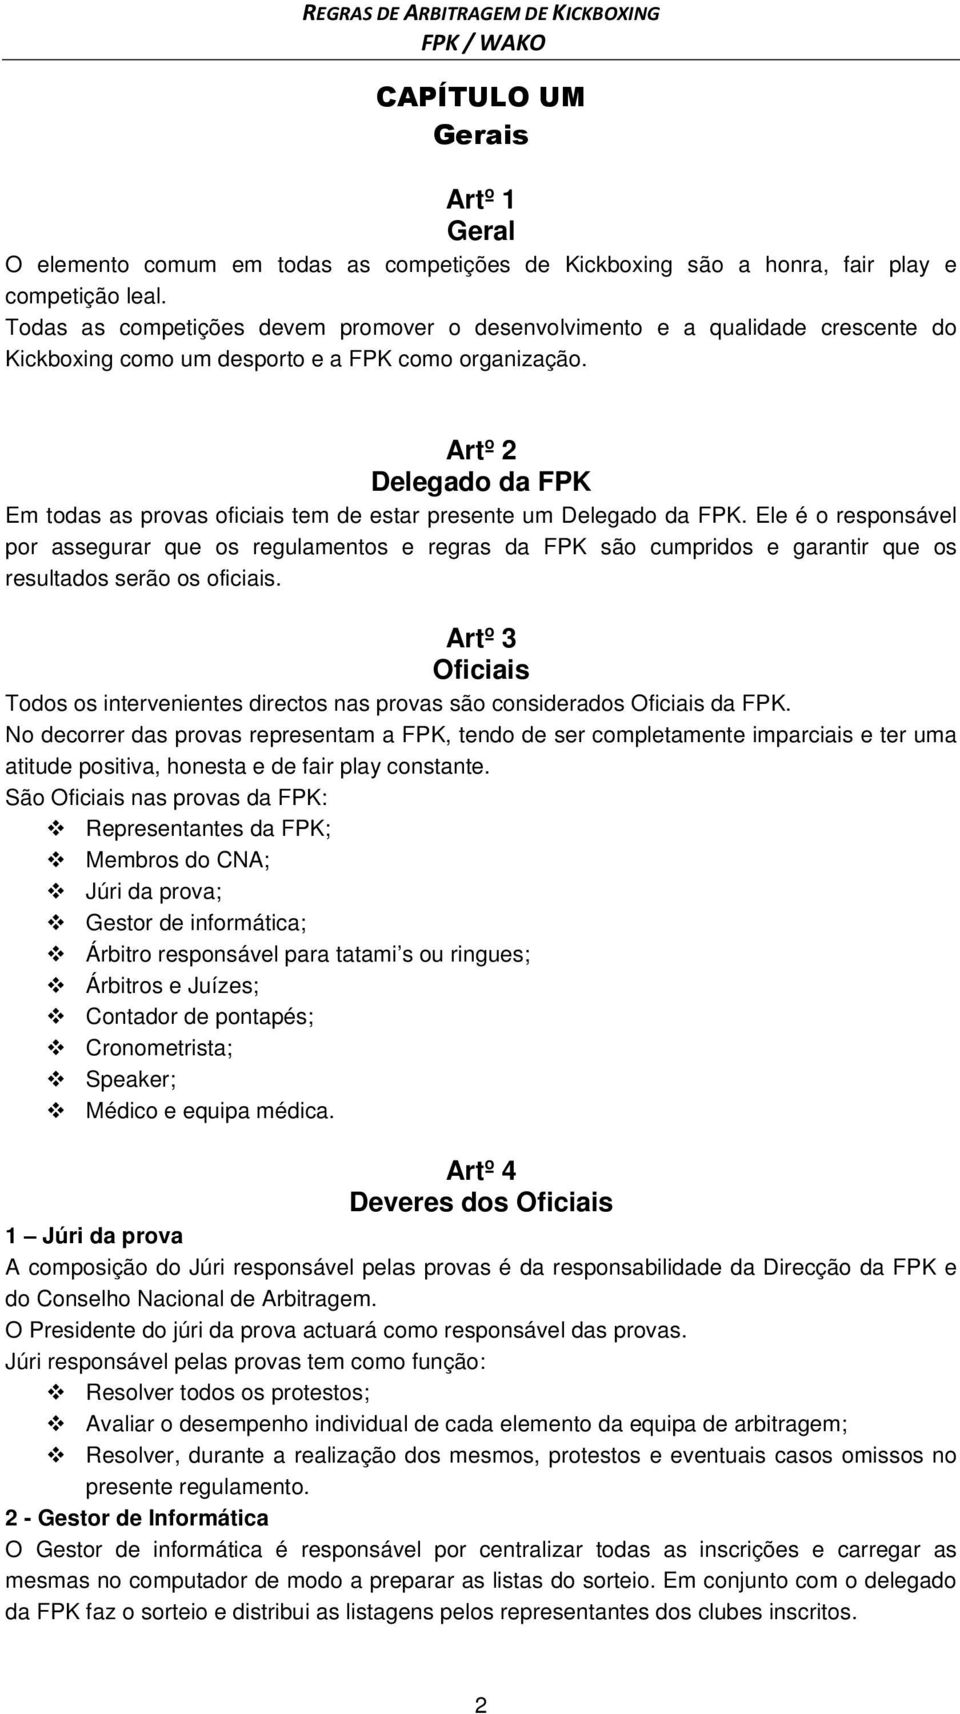 REGRAS DE ARBITRAGEM KICKBOXING FPKM / WAKO - PDF Download grátis